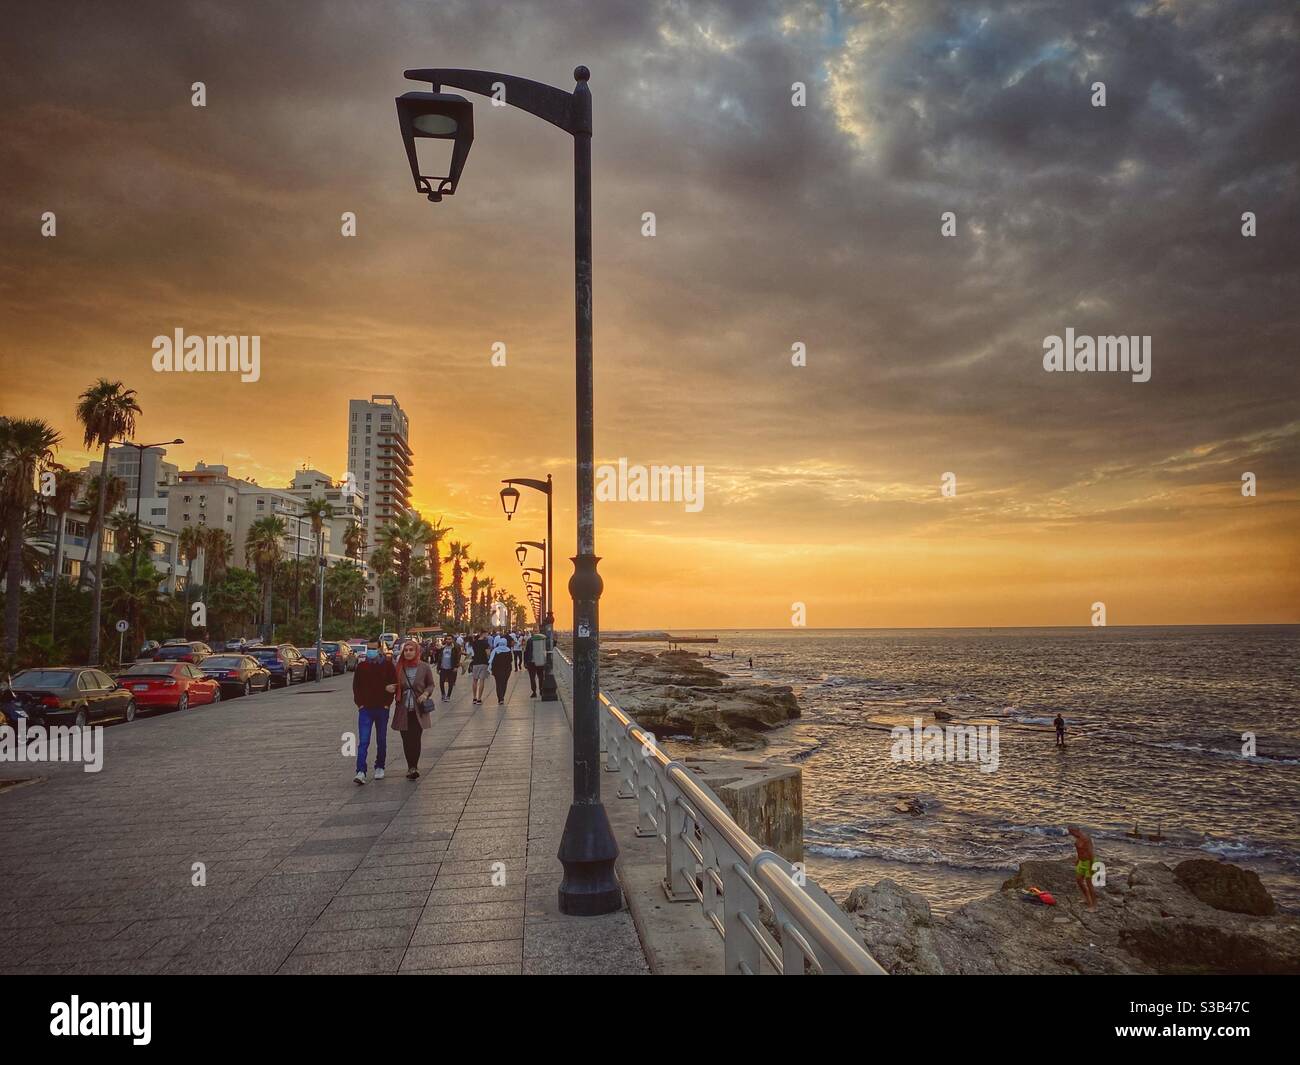 Charming sunset with people enjoying a walk at Beirut Lebanon promenade Stock Photo